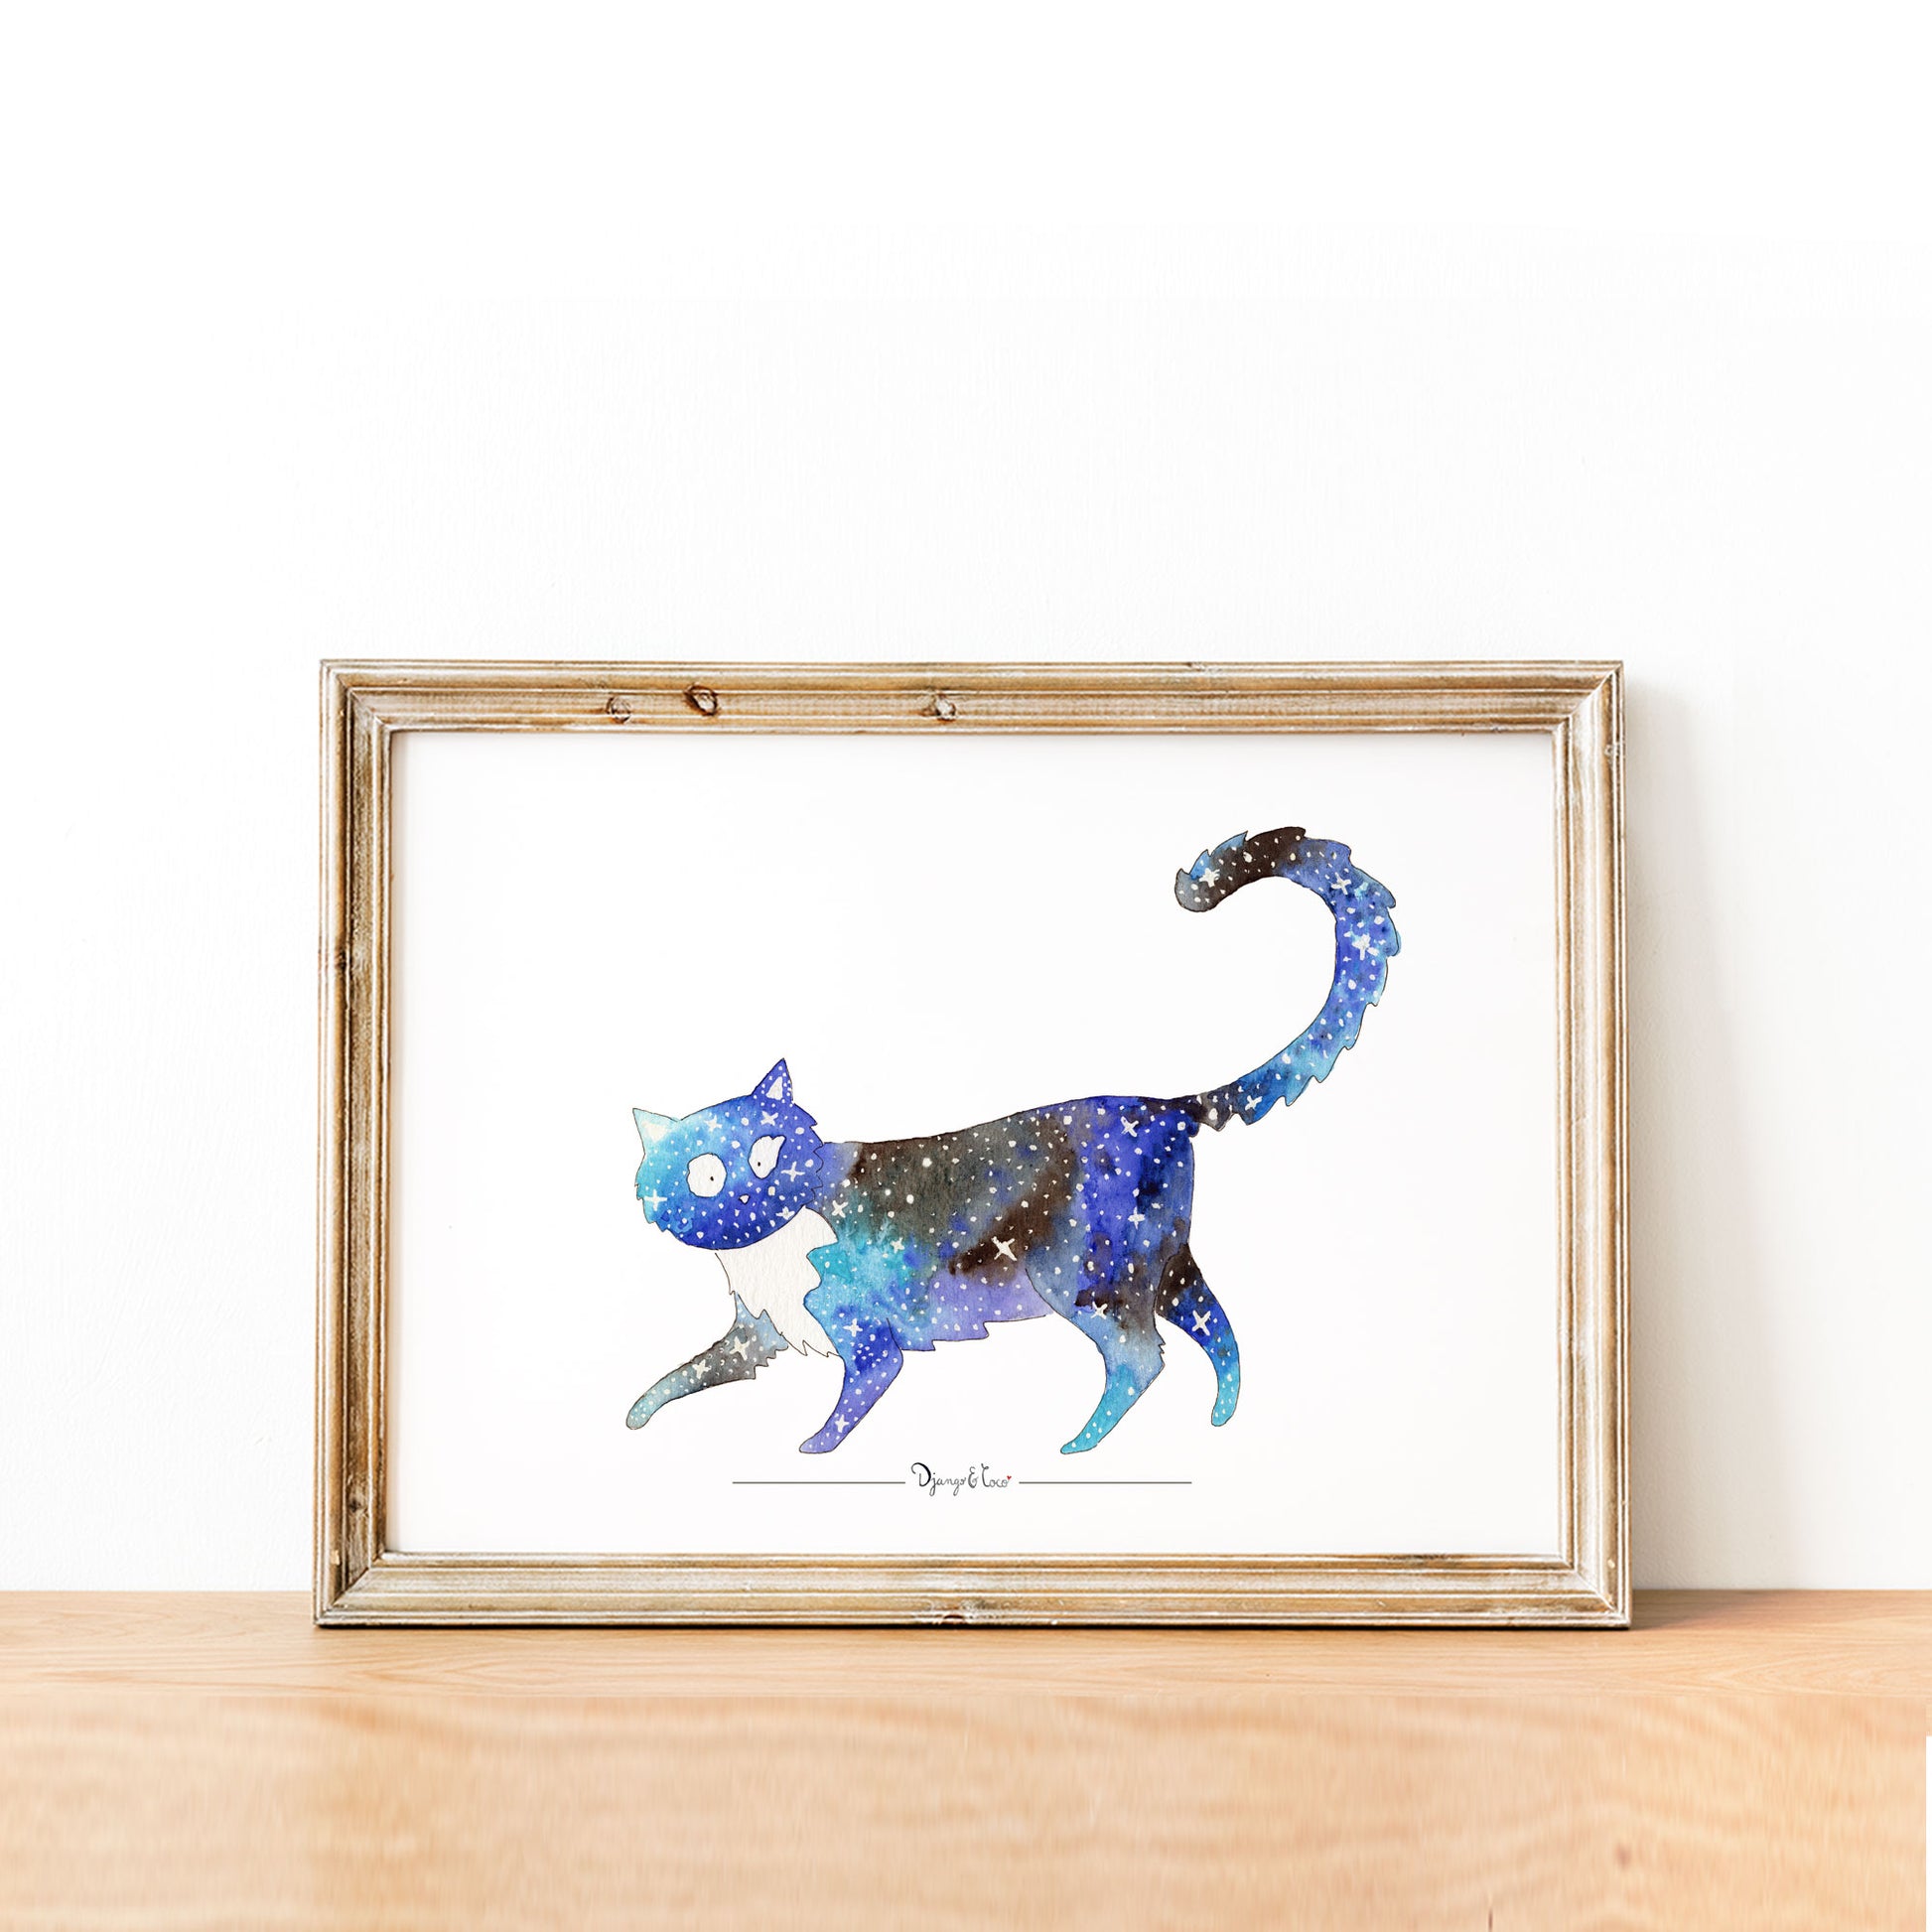 framed art of a galaxy cat